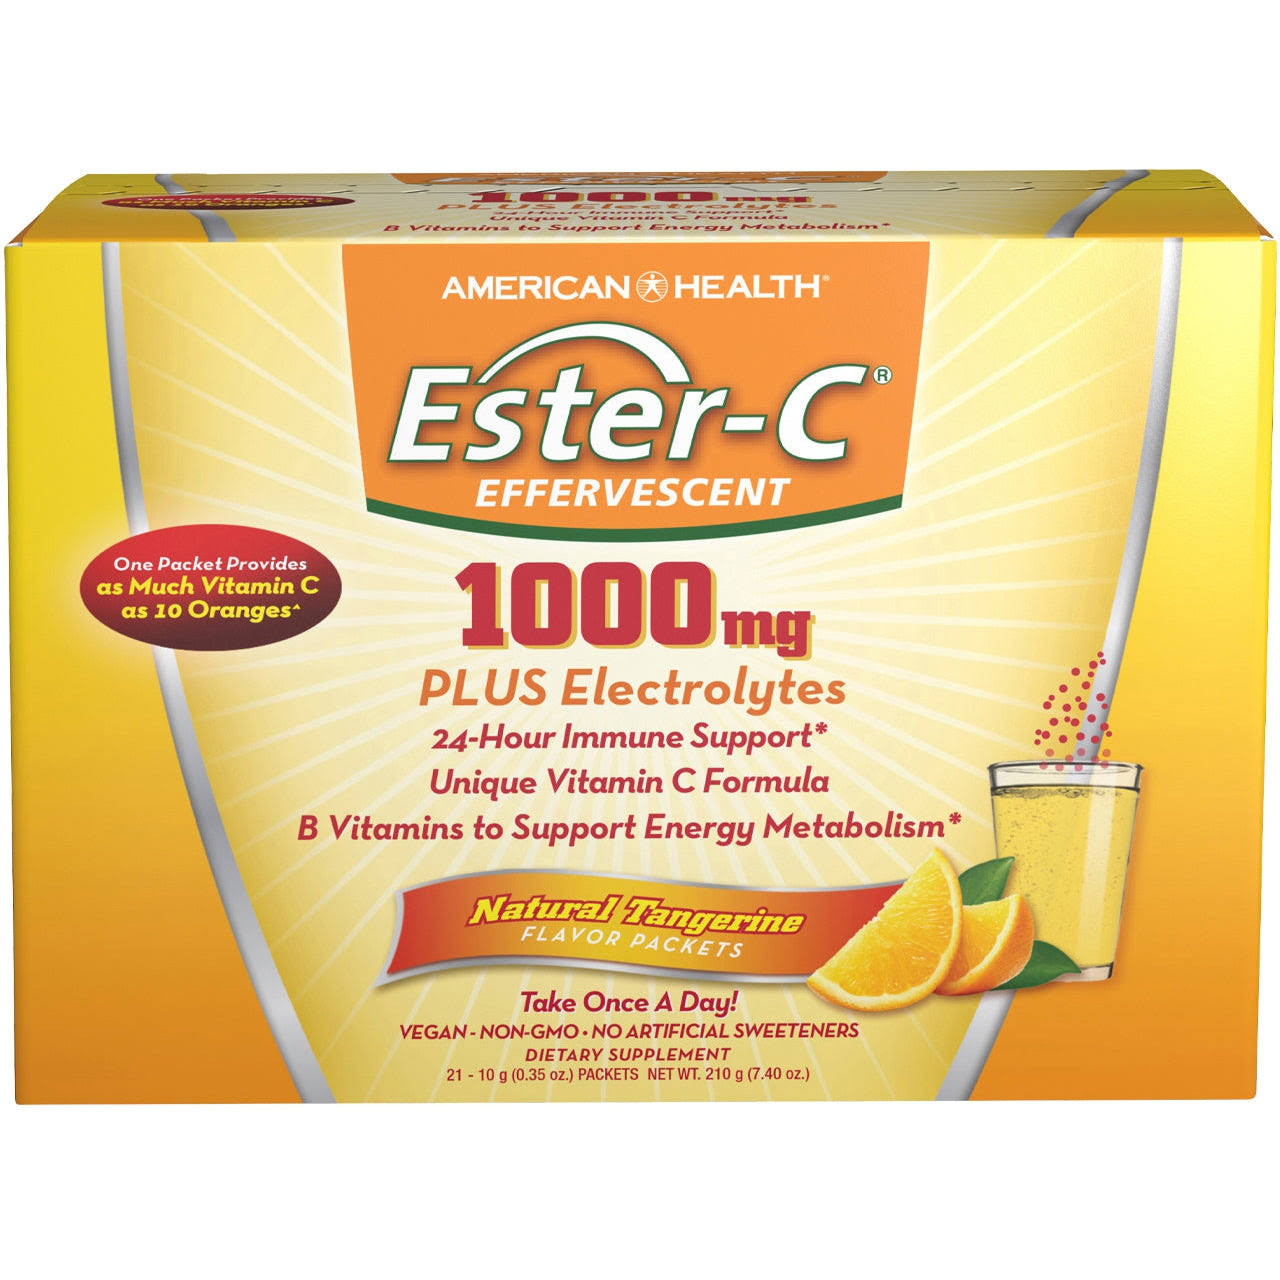 American Health Ester-C 1000 MG Effervescent 21 Packets Tangerine